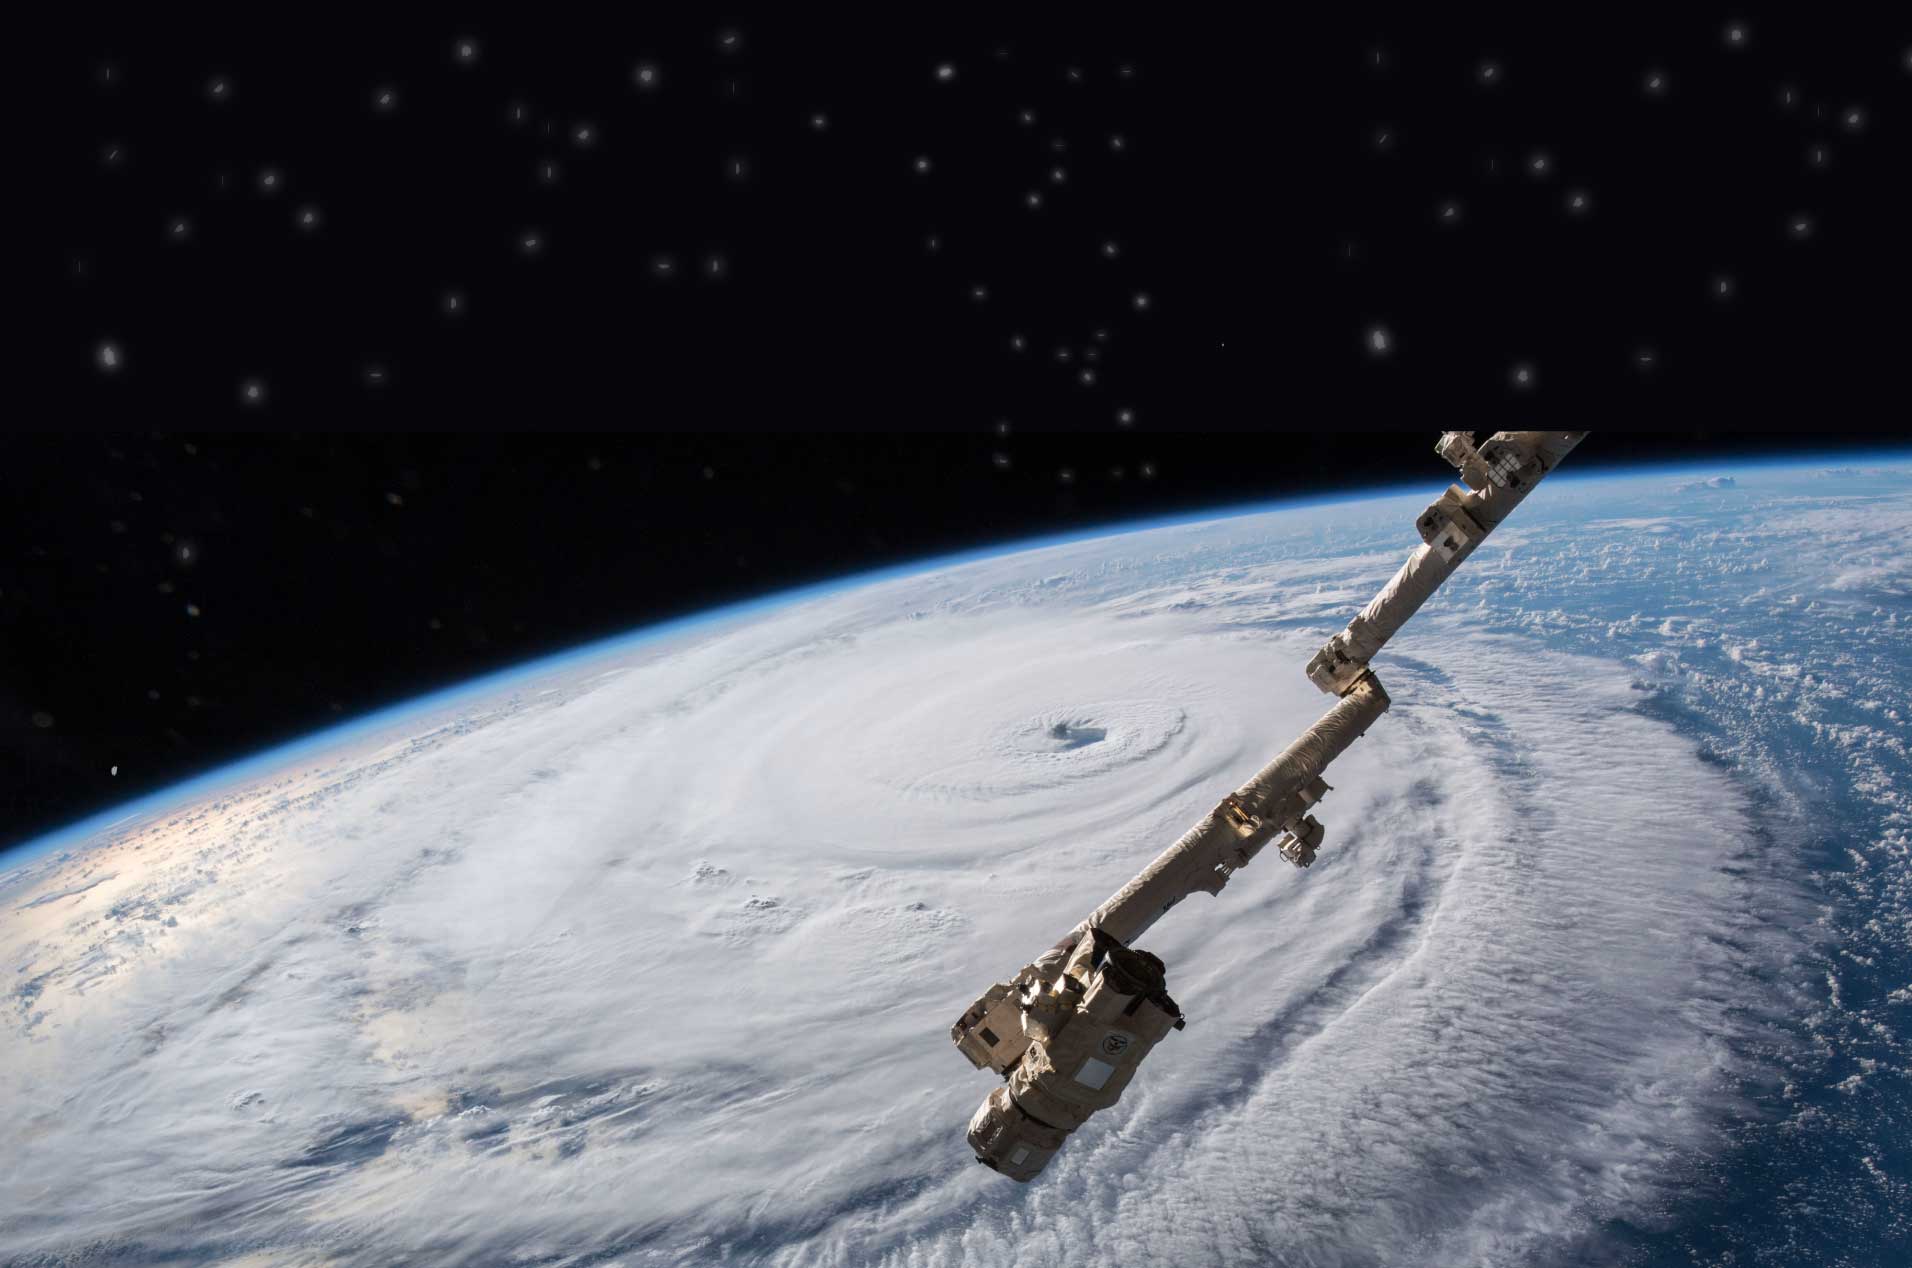 Sattelite imagery of a hurricane